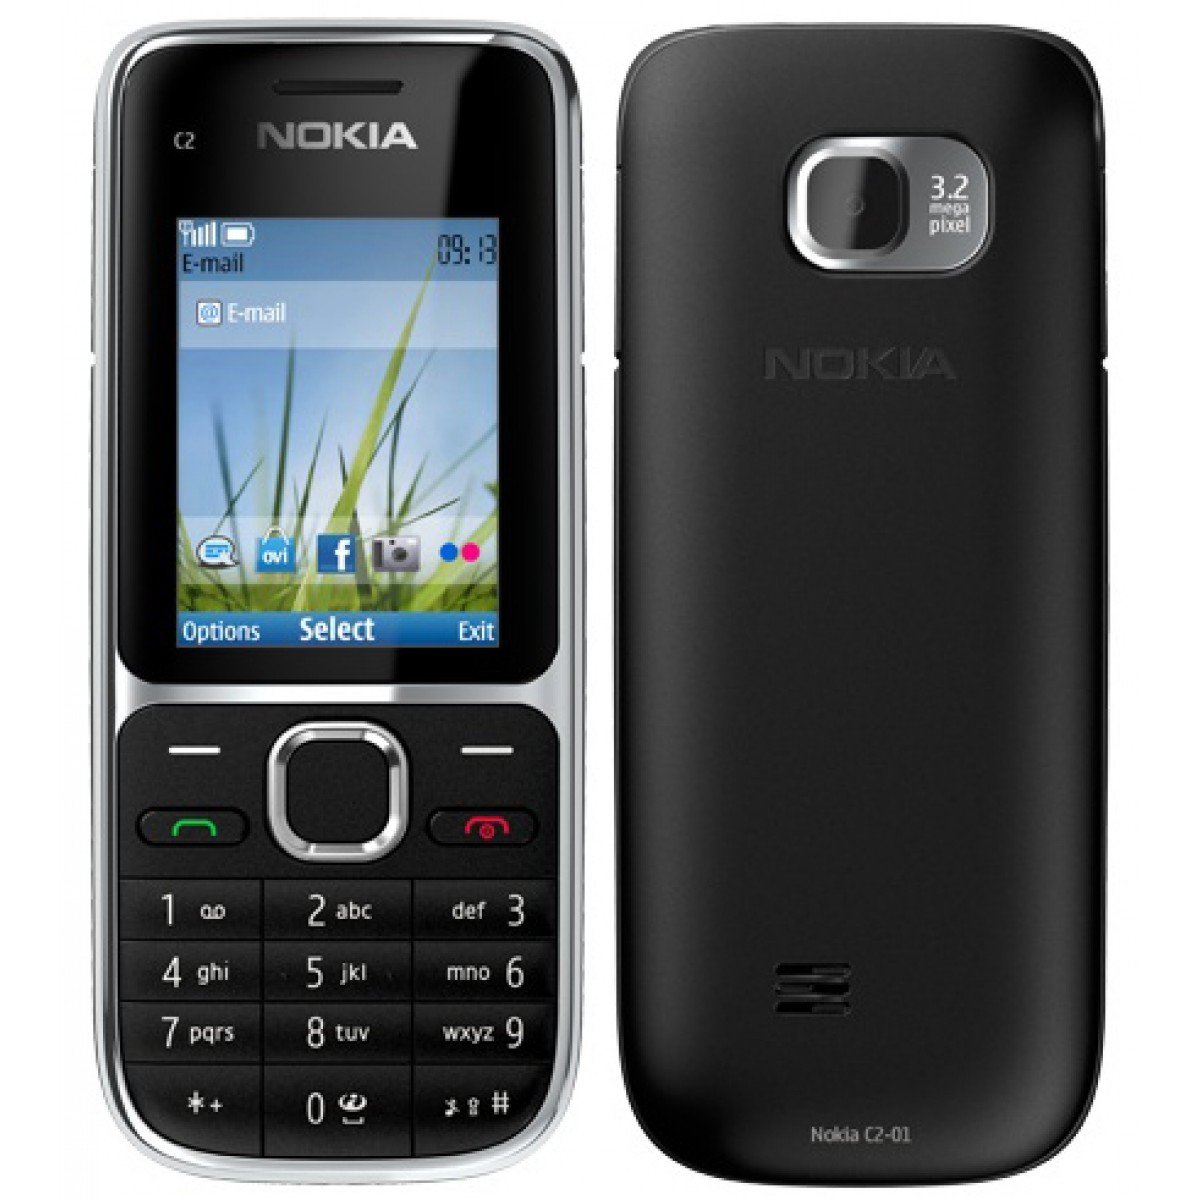 Nokia C2-01 Tasten-Handy Quad-Band Mobile Phone Bluetooth Kamera MP3 wie Neu Box